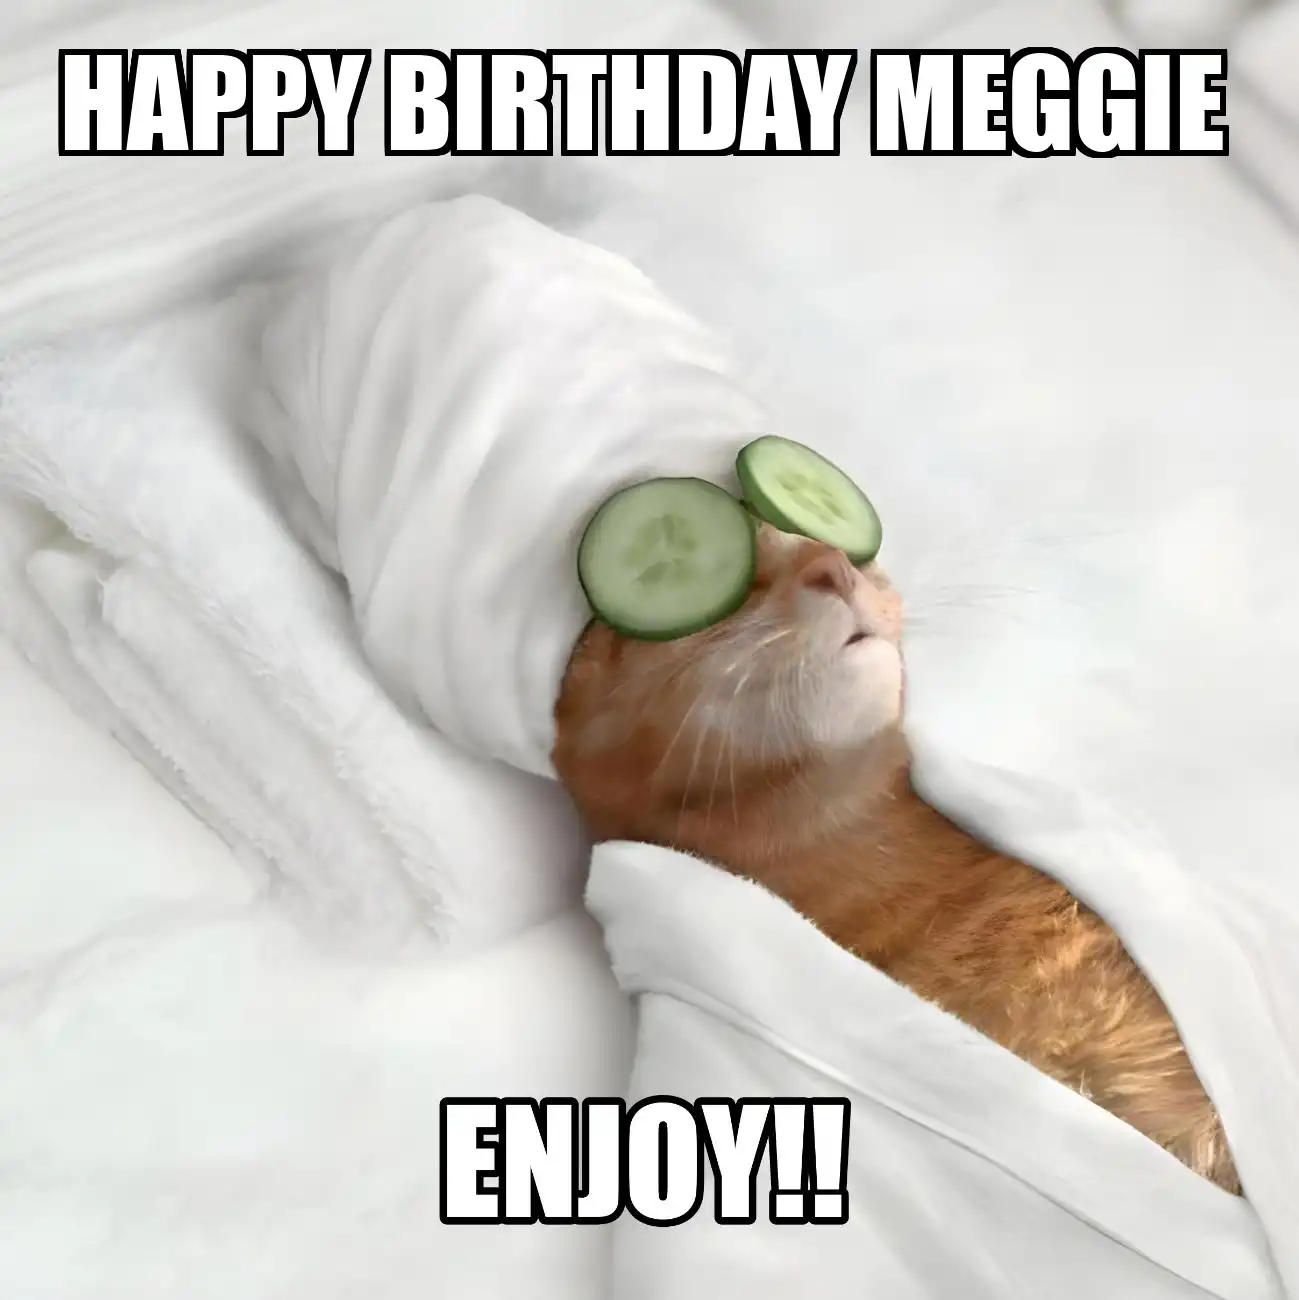 Happy Birthday Meggie Enjoy Cat Meme